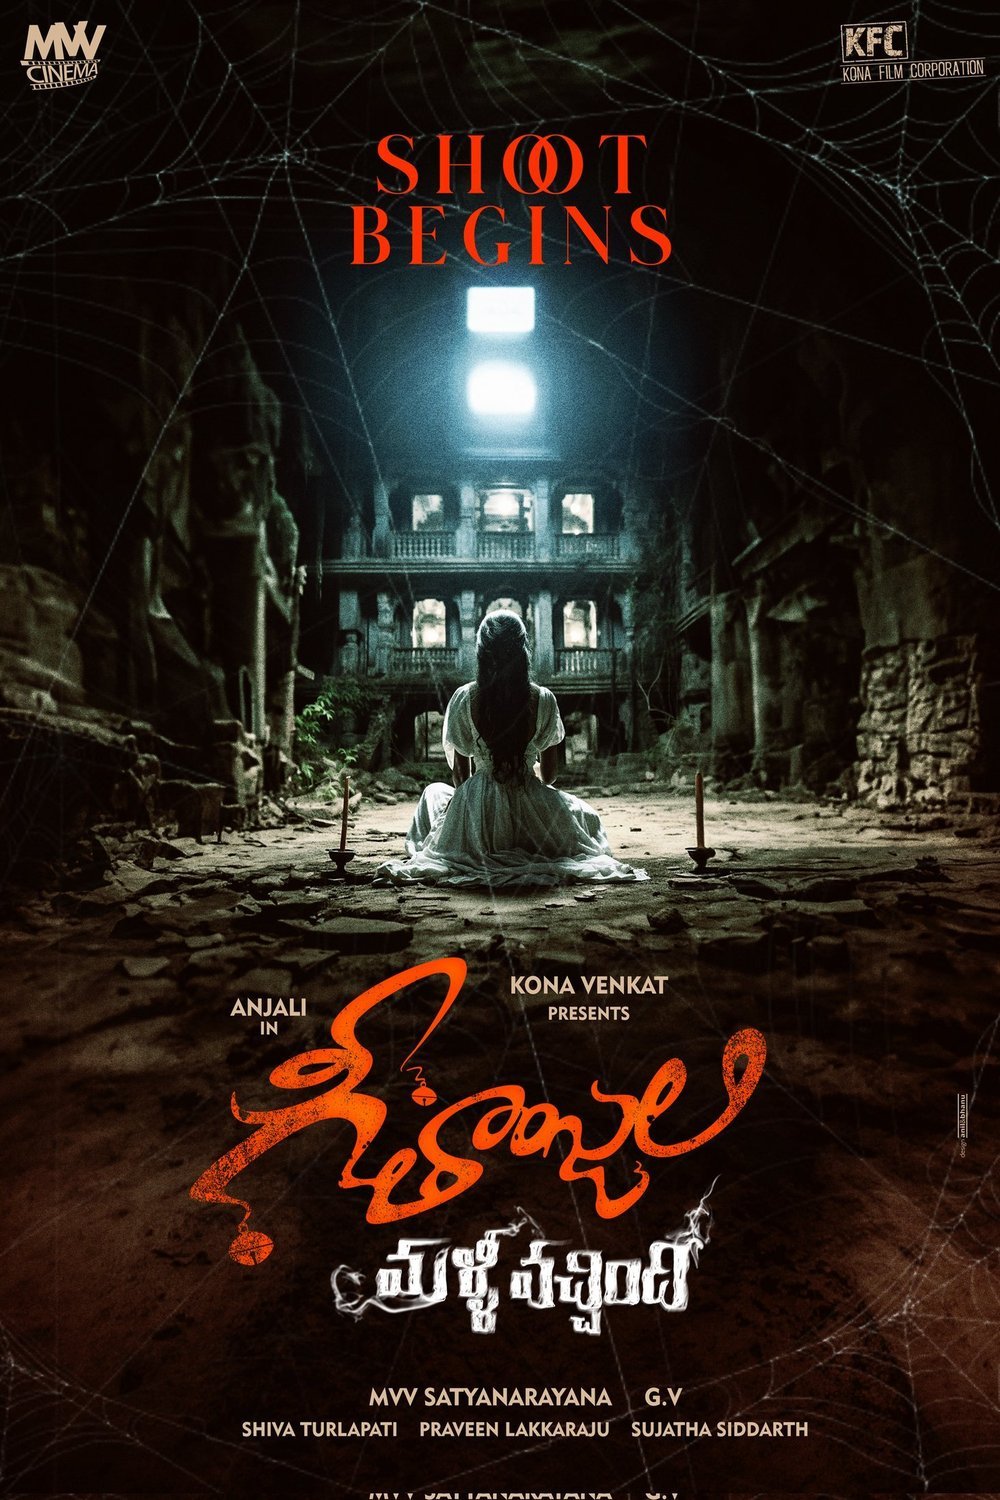 Telugu poster of the movie Geethanjali Malli Vachindi